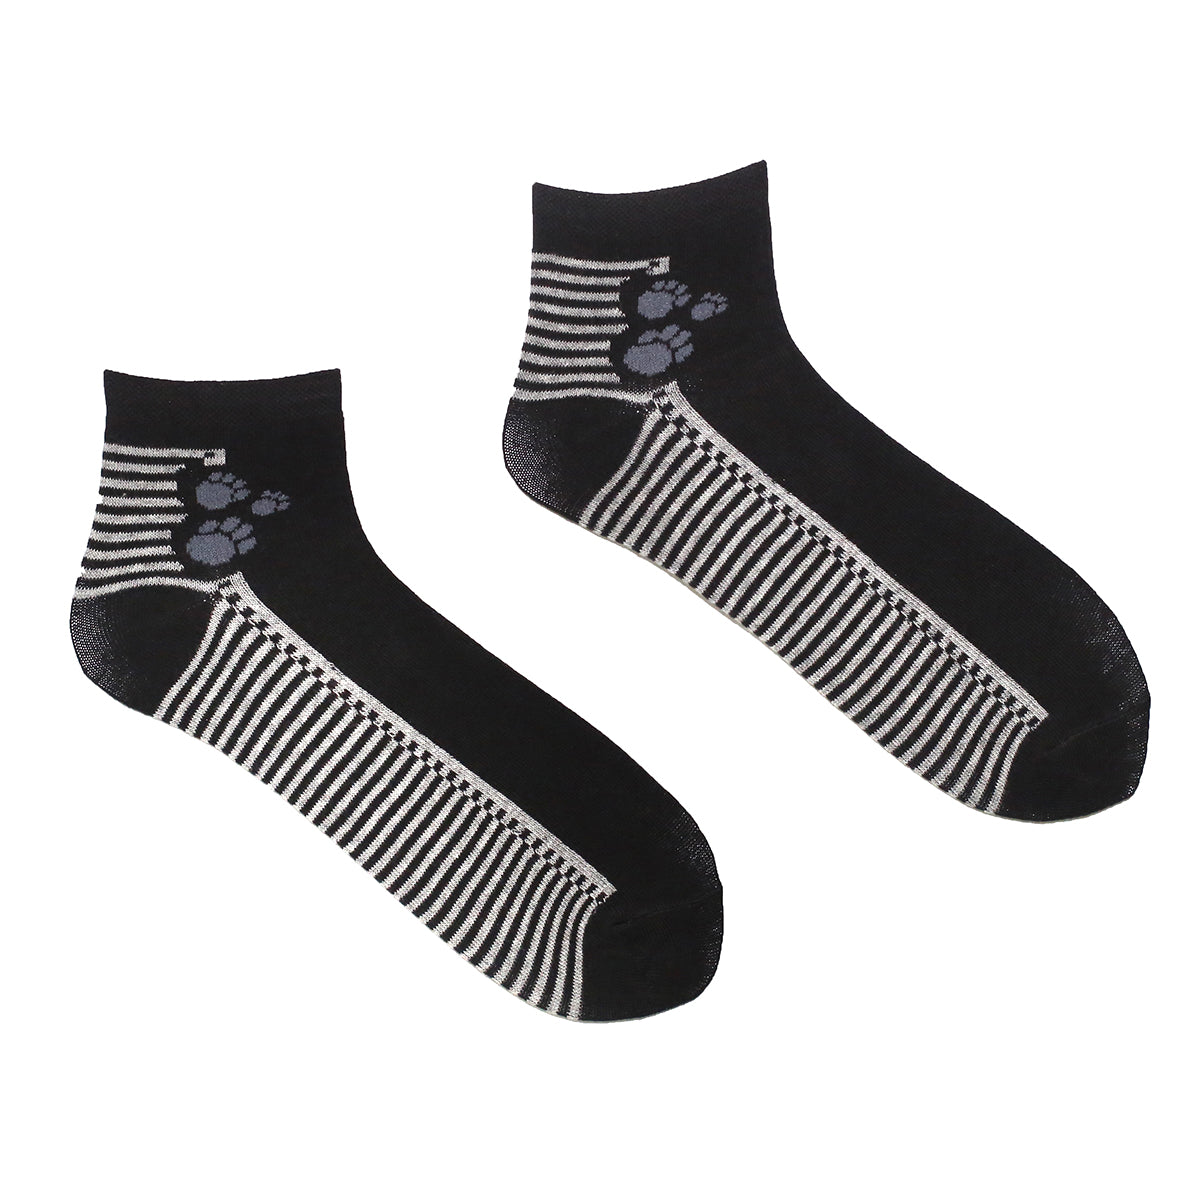 Cat Step Ankle Socks for Men by MB Hosiery